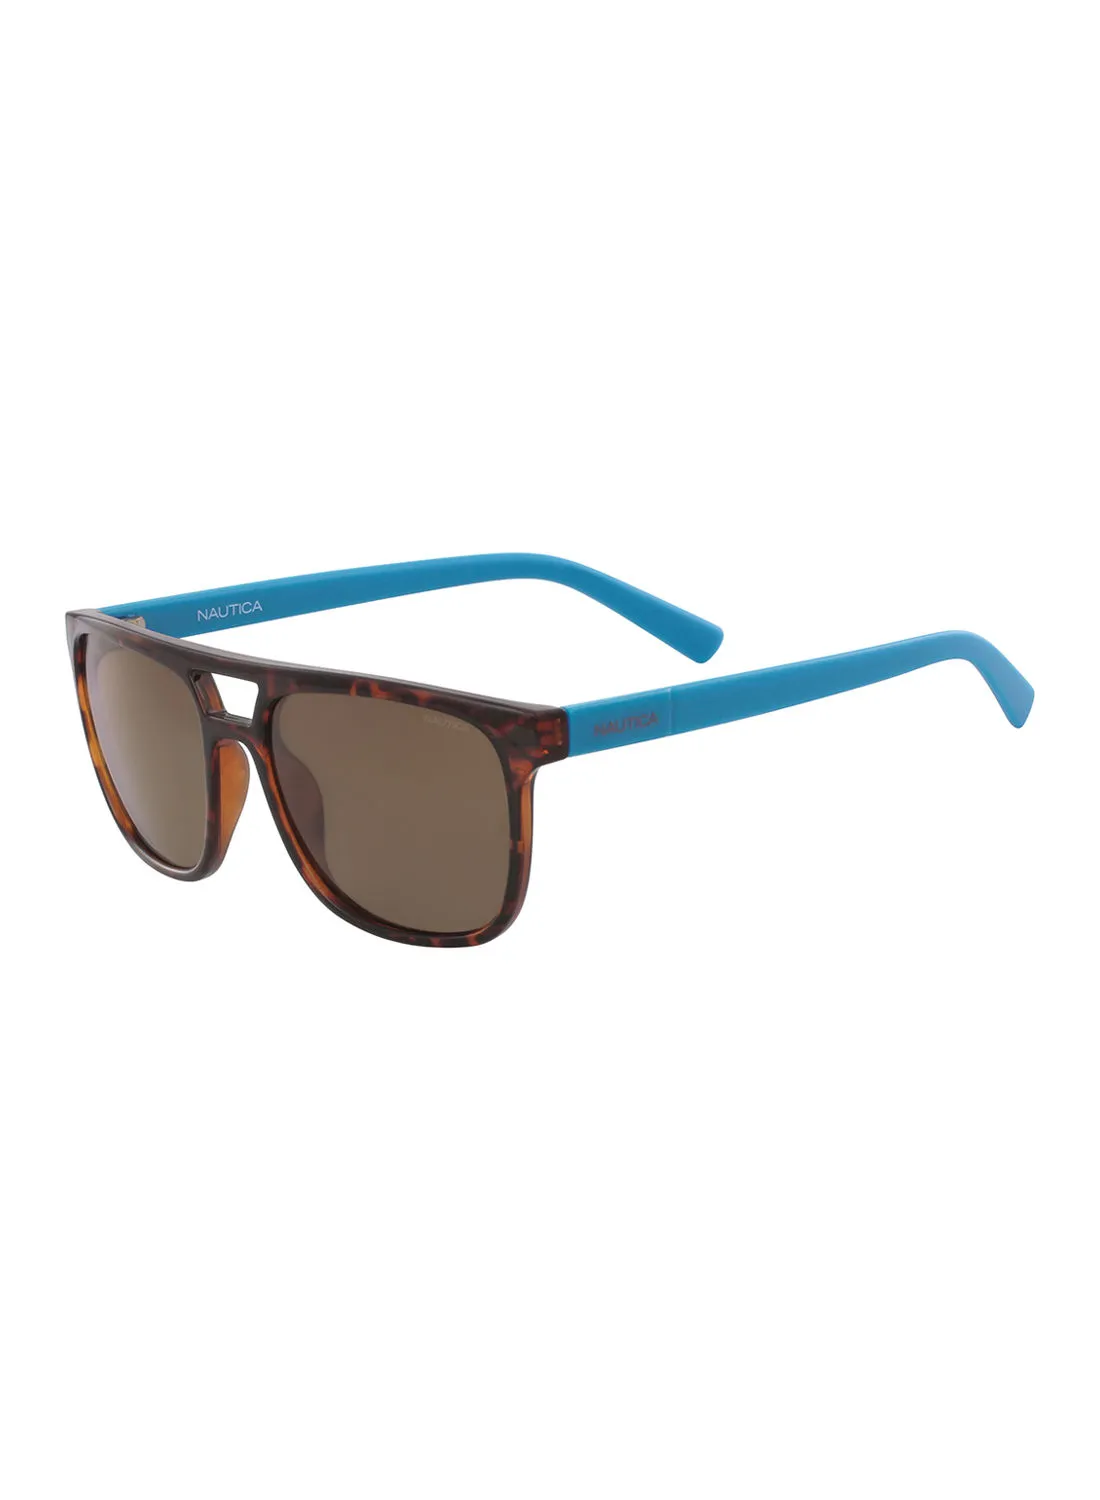 NAUTICA Men's UV Protection Rectangular Sunglasses - Lens Size: 56 mm